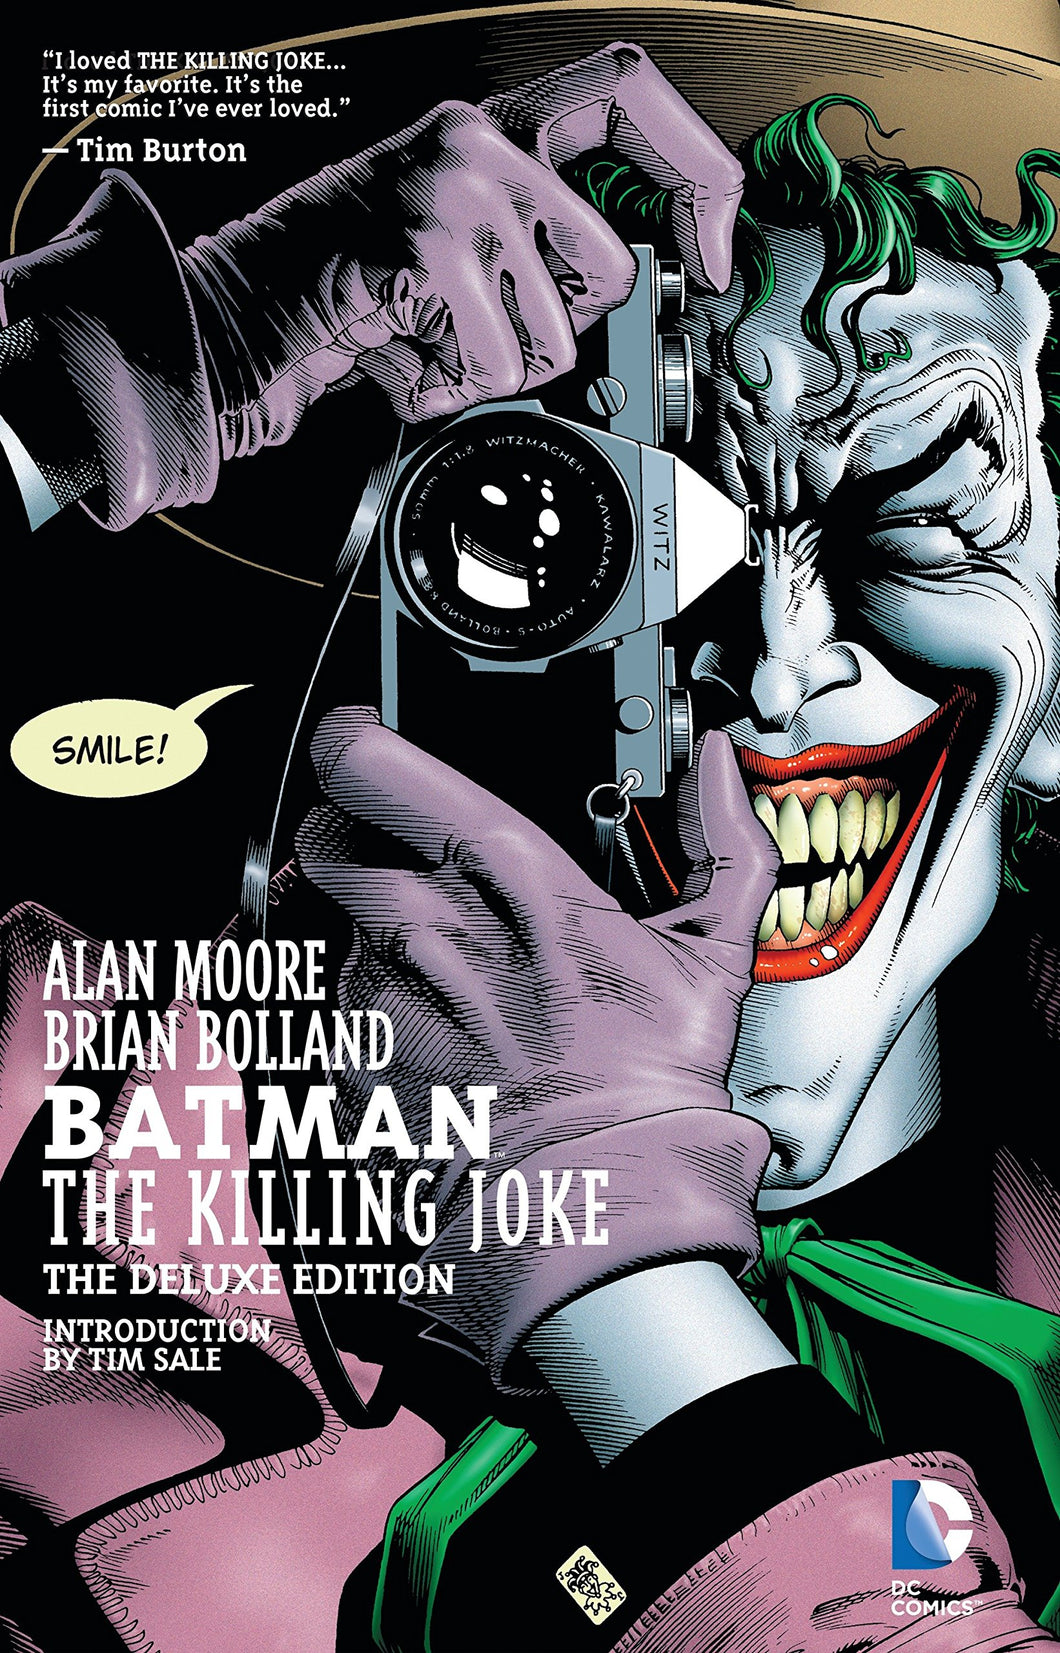 Batman: The Killing Joke by Alan Moore and Brian Bolland